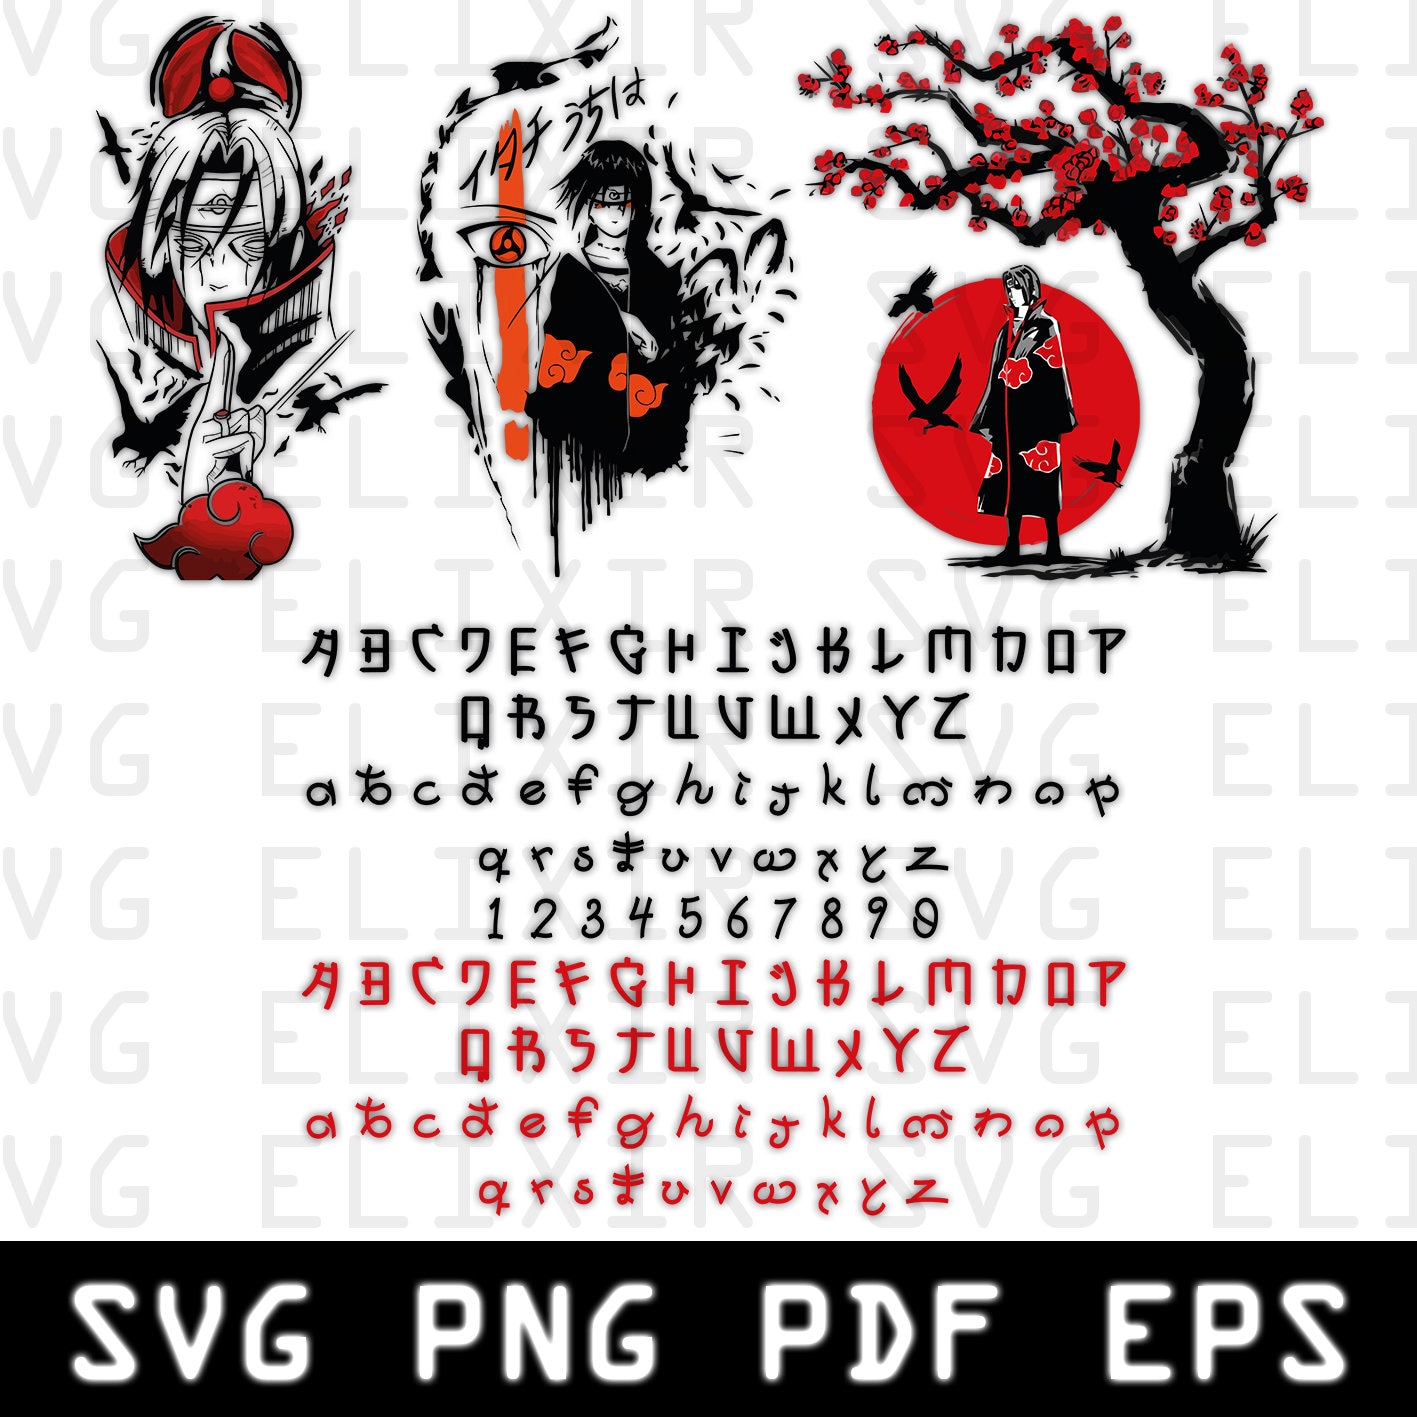 GN Kill Gothic U  Free Japanese Font  Free Japanese Font  Japanese free  Japanese Fonts